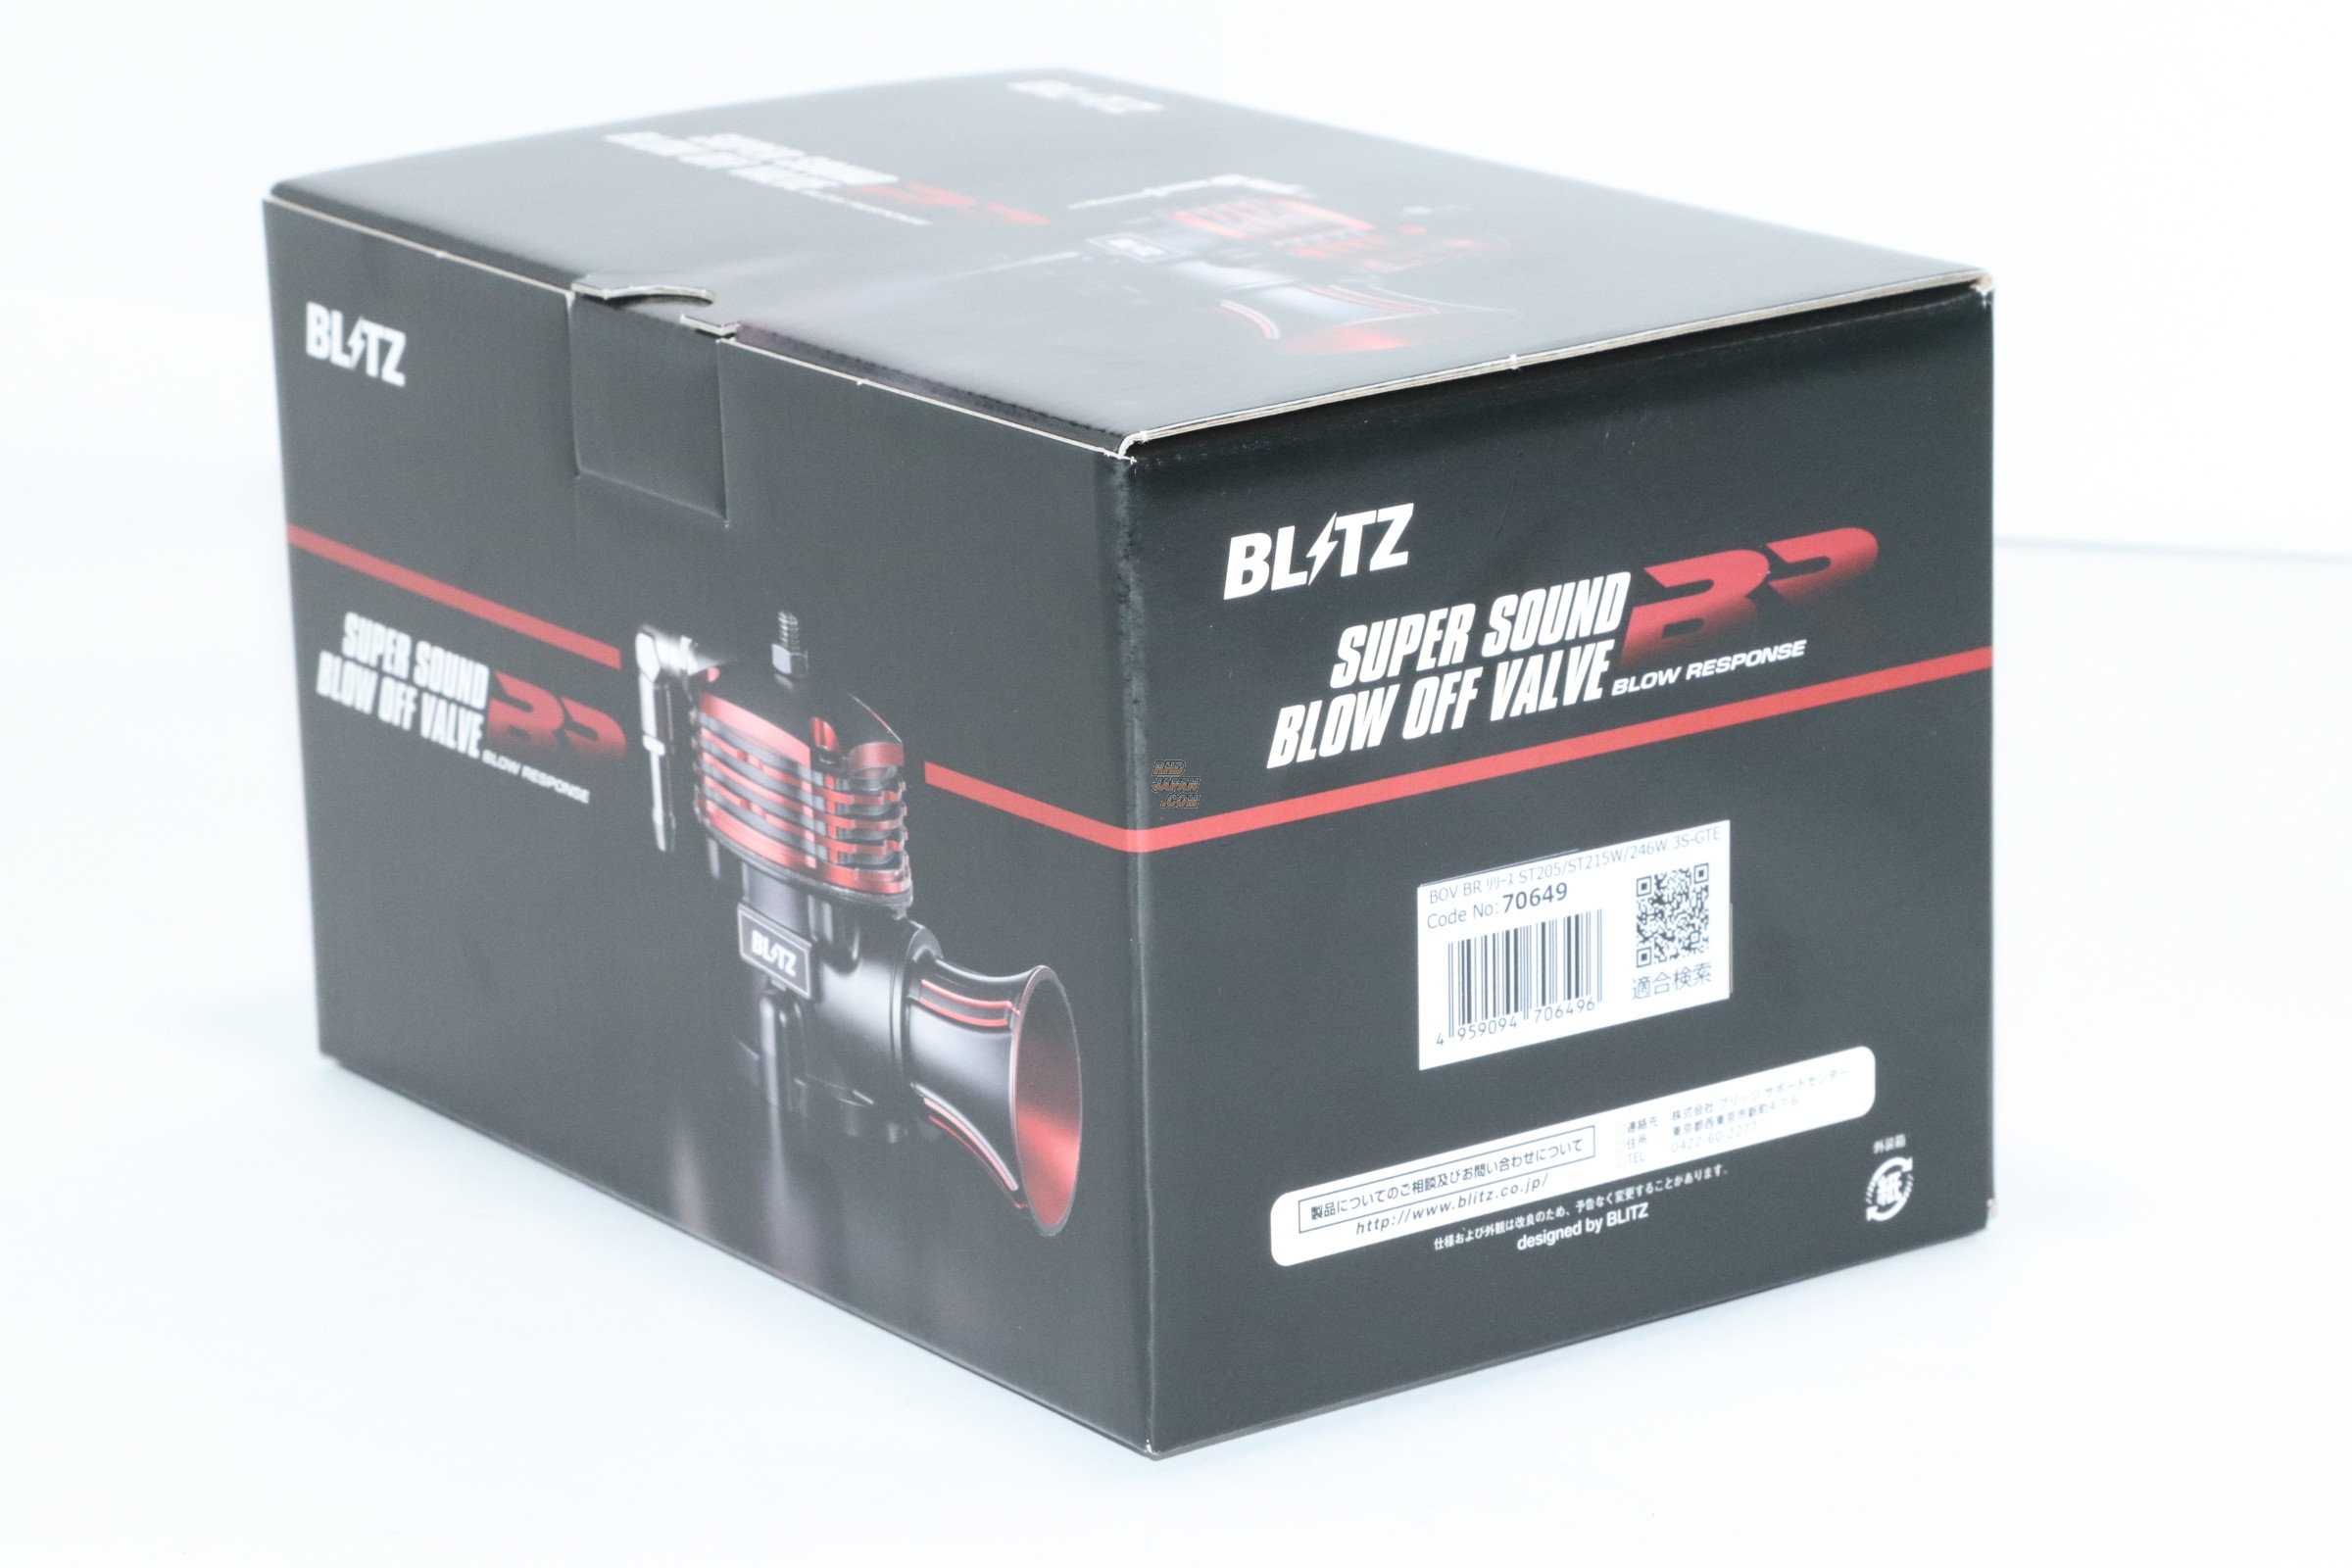 Blitz Super Sound Blow Off Valve BR Blow Response Release Type S660 JW5  RHDJapan